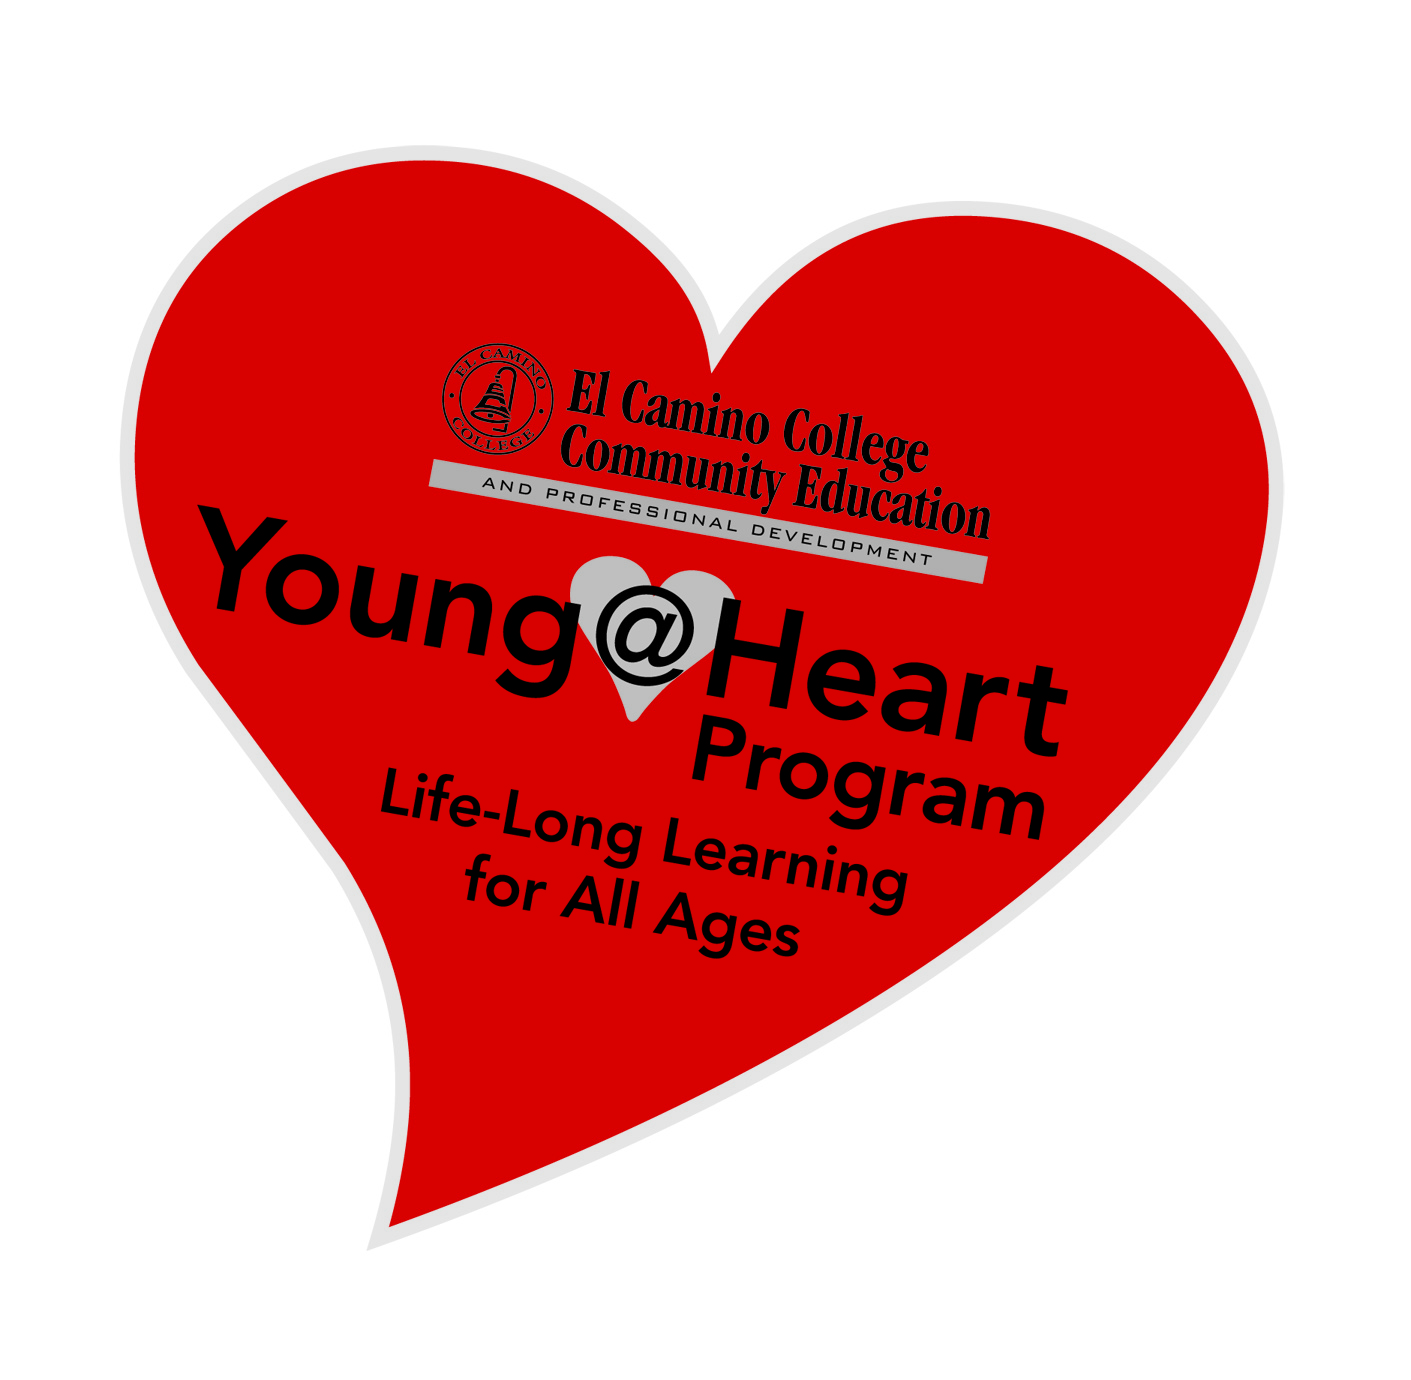 Young @ Heart 50+ - Courses - El Camino College Community Education